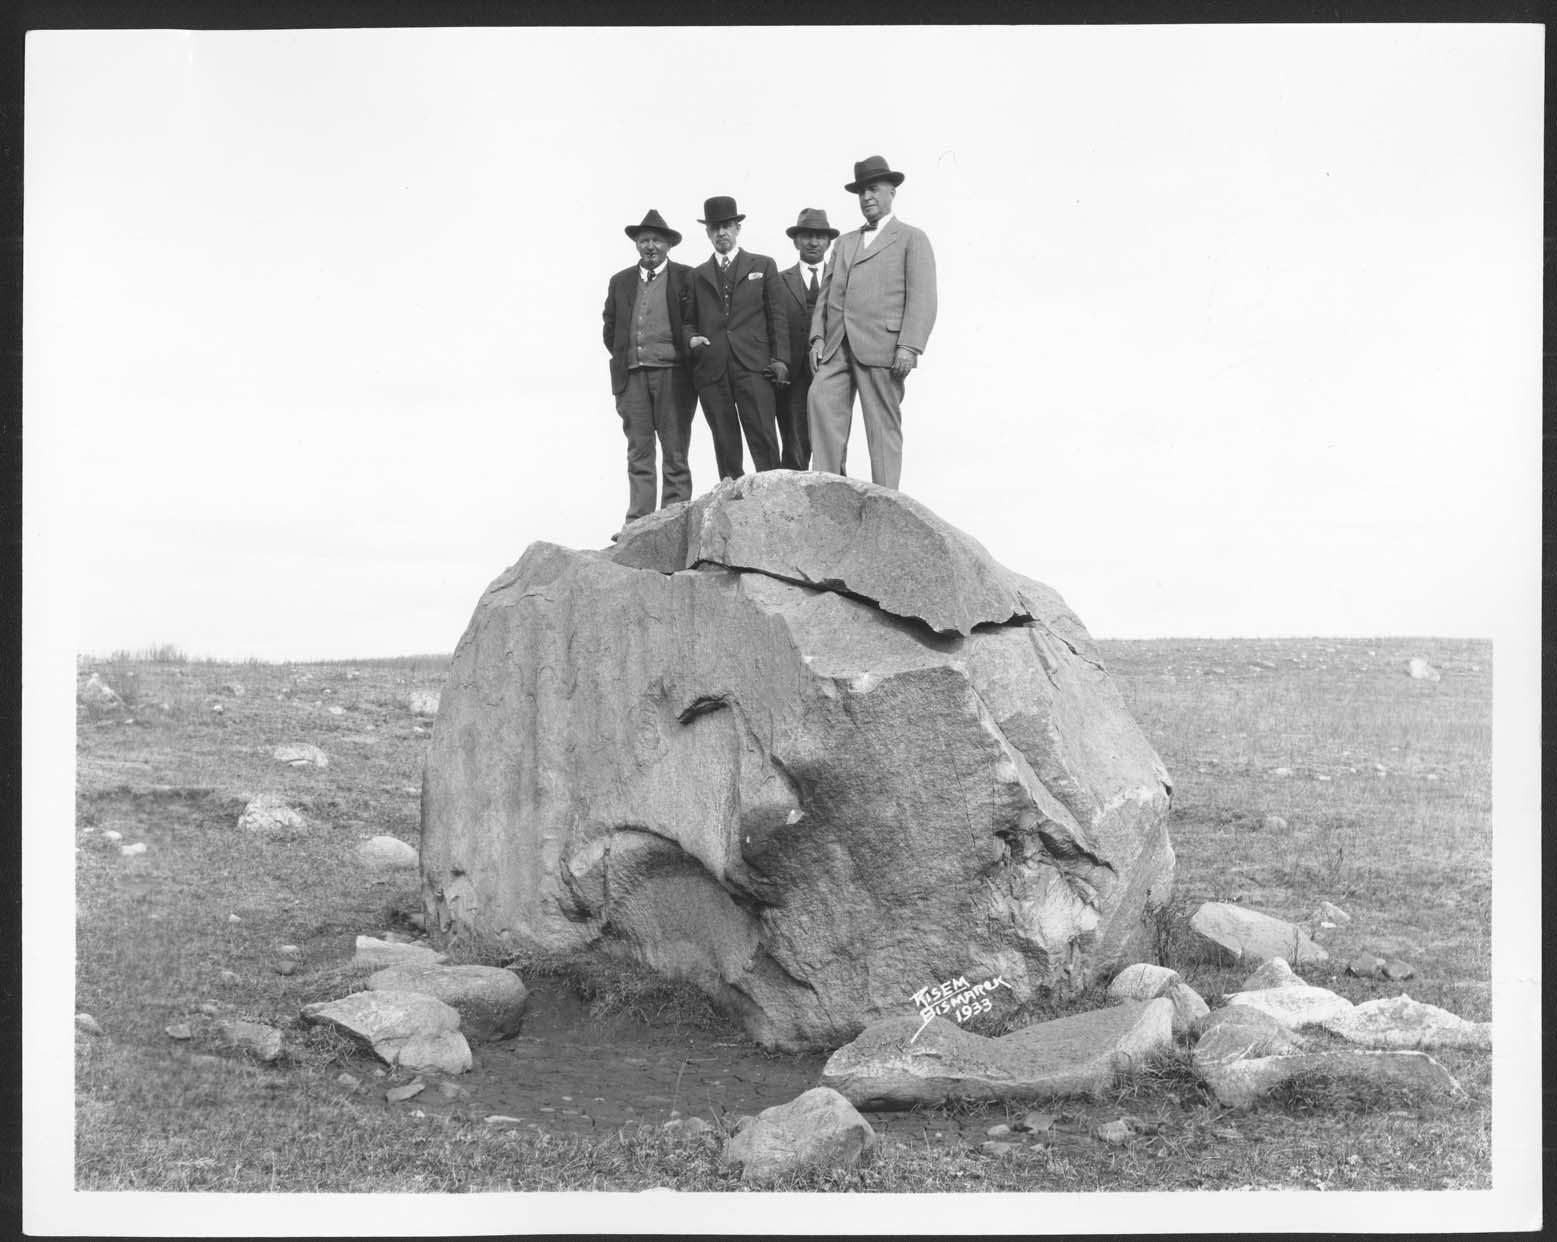 Men atop the cornerstone boulder